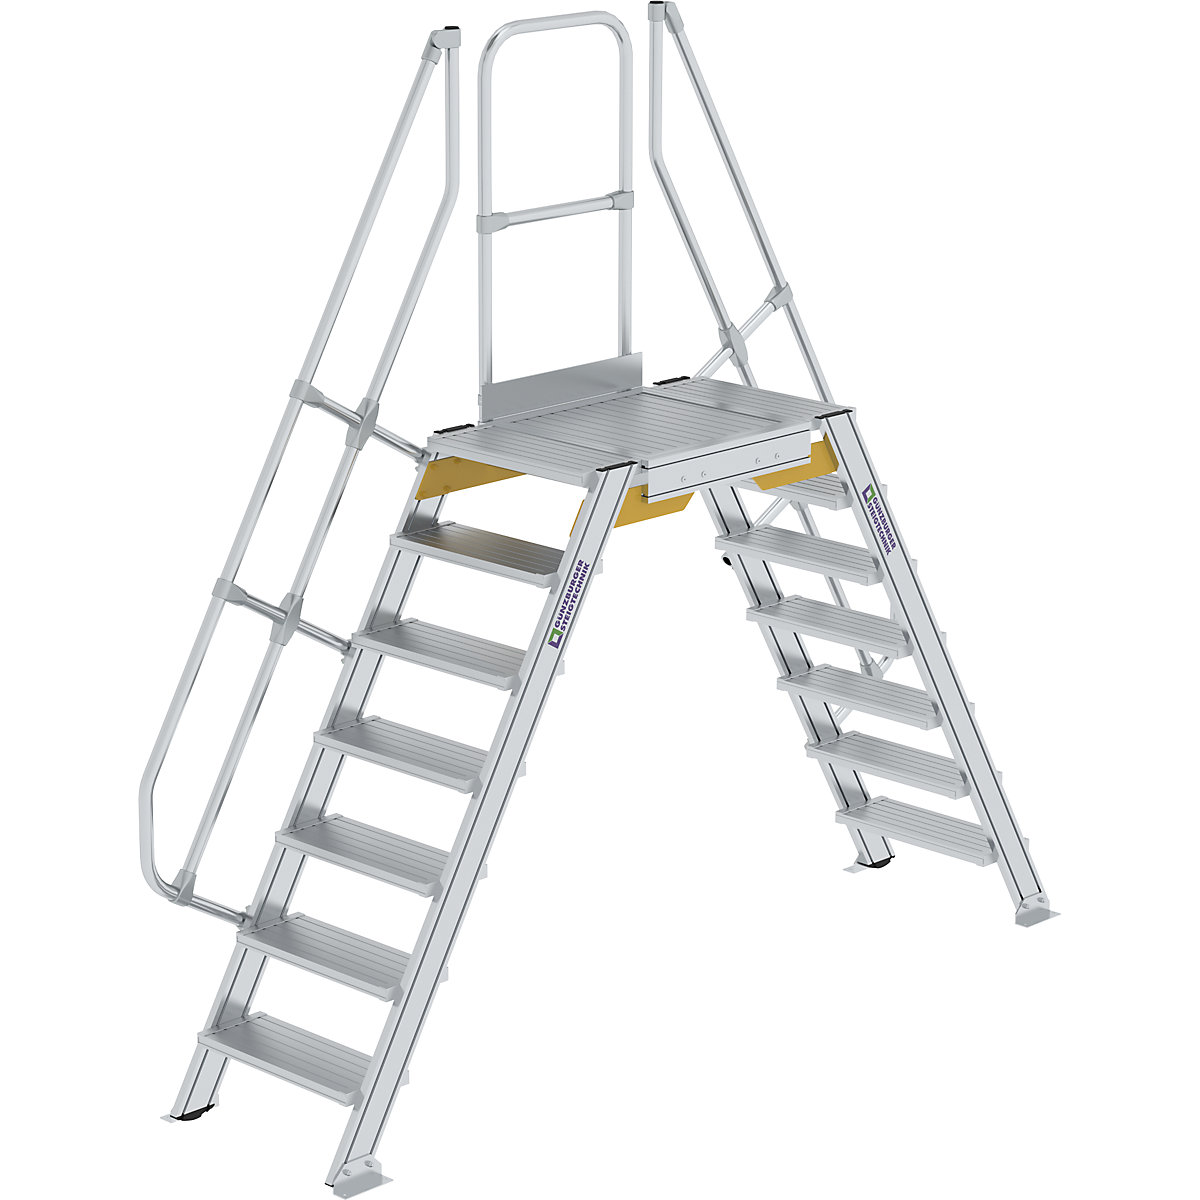 Premostitvena lestev – MUNK, skupna nosilnost 300 kg, 9 stopnic, podest 1200 x 600 mm